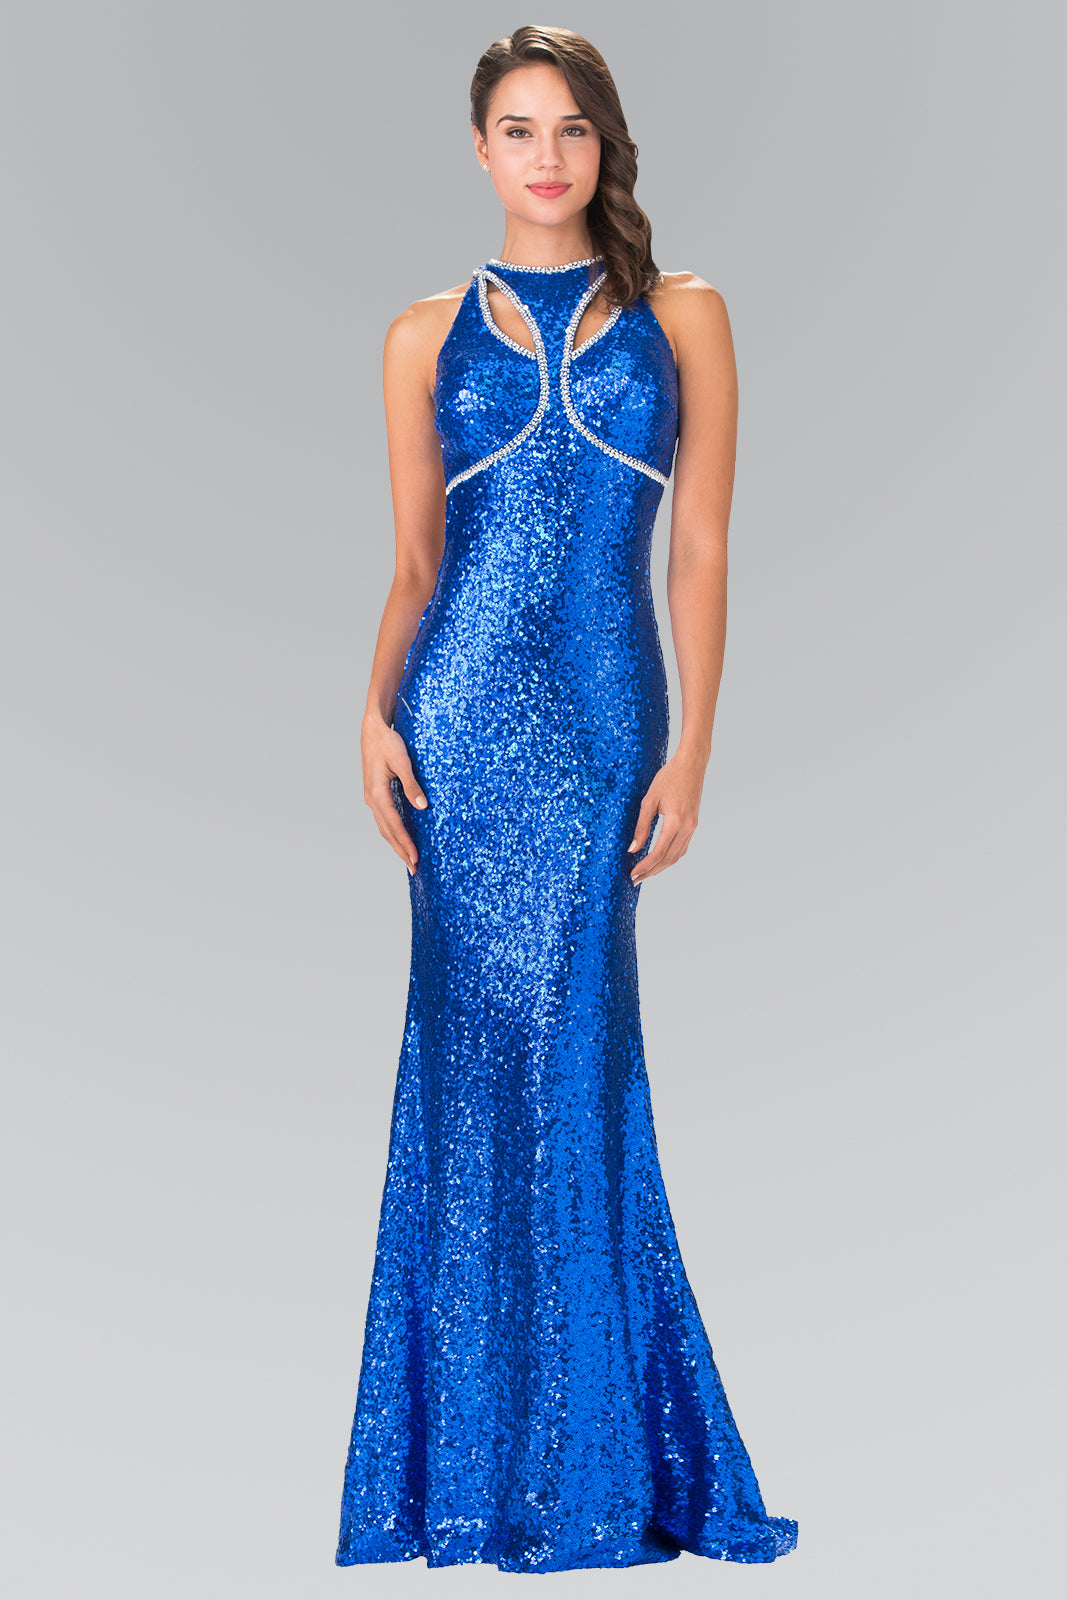 Embellished Cut Out Neckline Mermaid Dress by Elizabeth K - GL2217